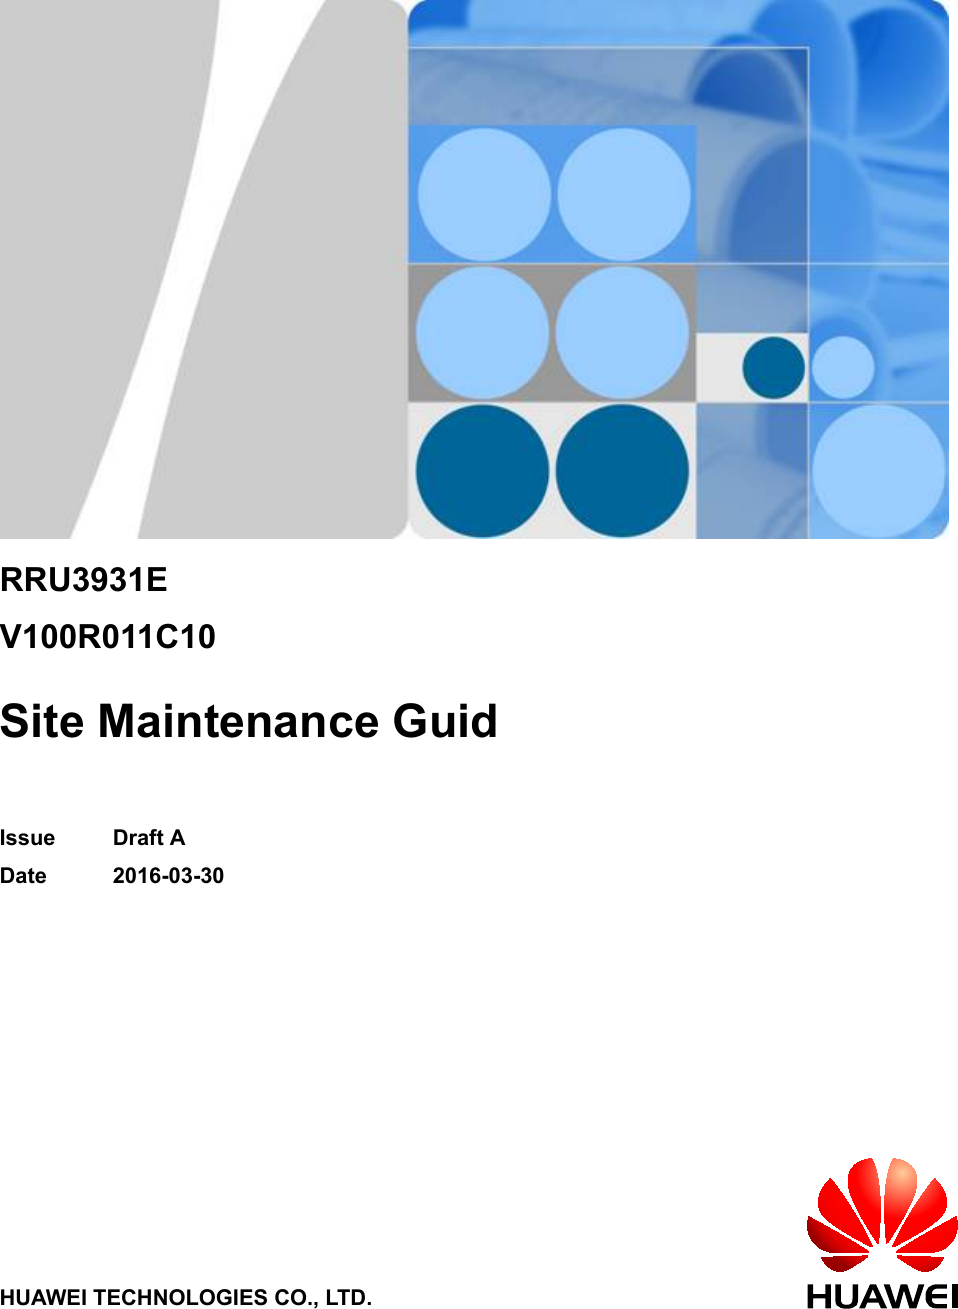 RRU3931EV100R011C10Site Maintenance GuidIssue Draft ADate 2016-03-30HUAWEI TECHNOLOGIES CO., LTD.